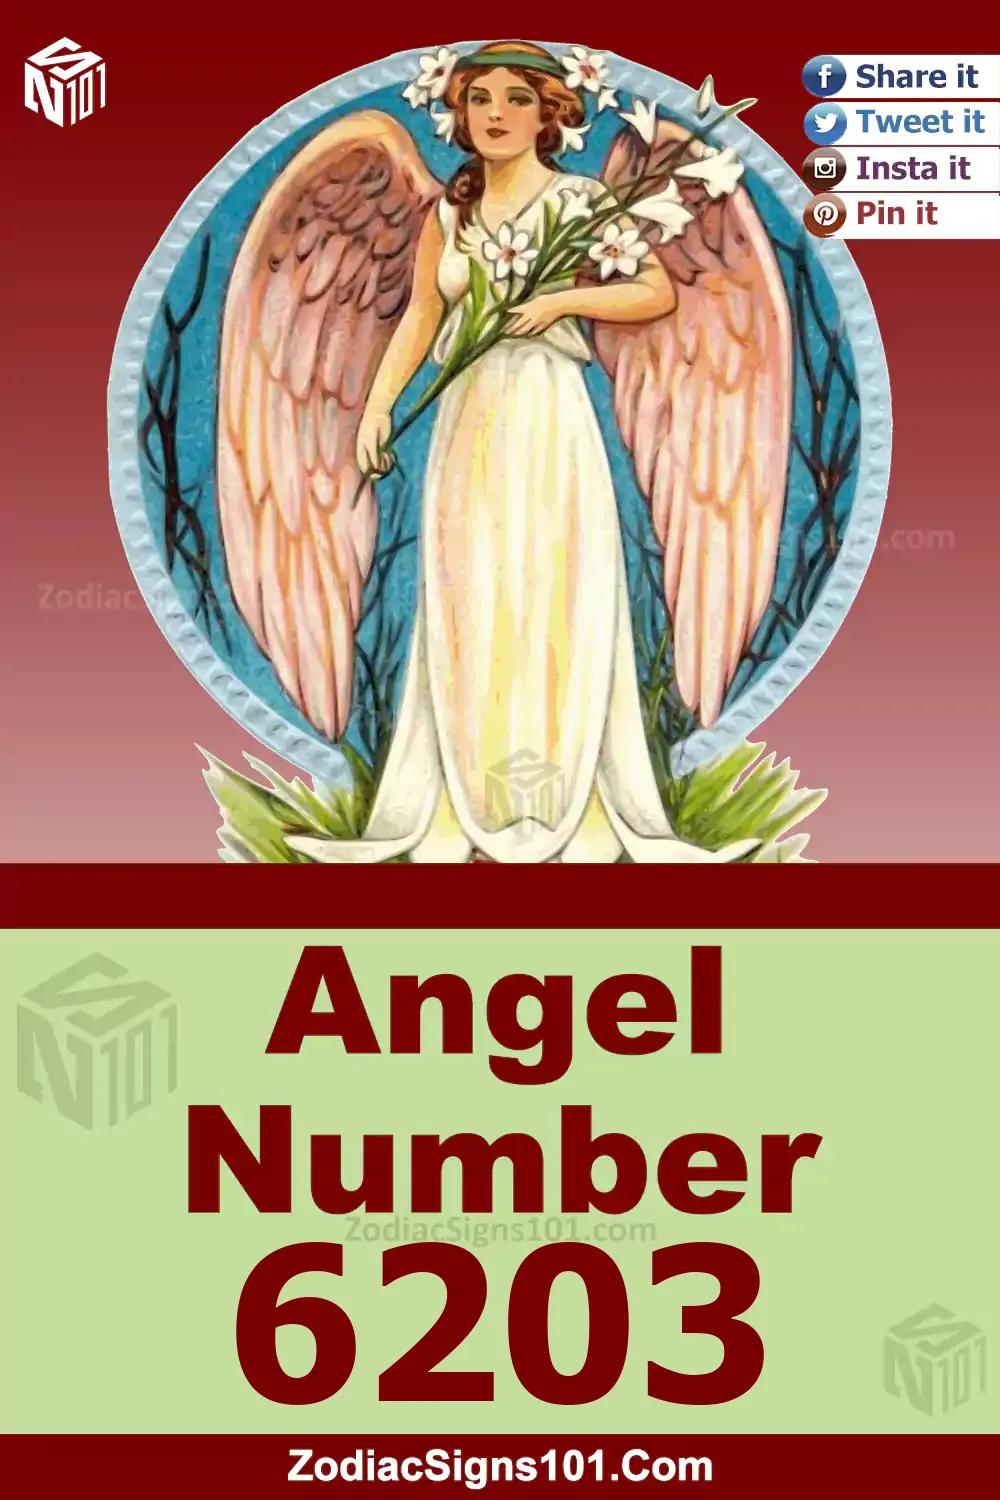 6203-Angel-Number-Meaning.jpg